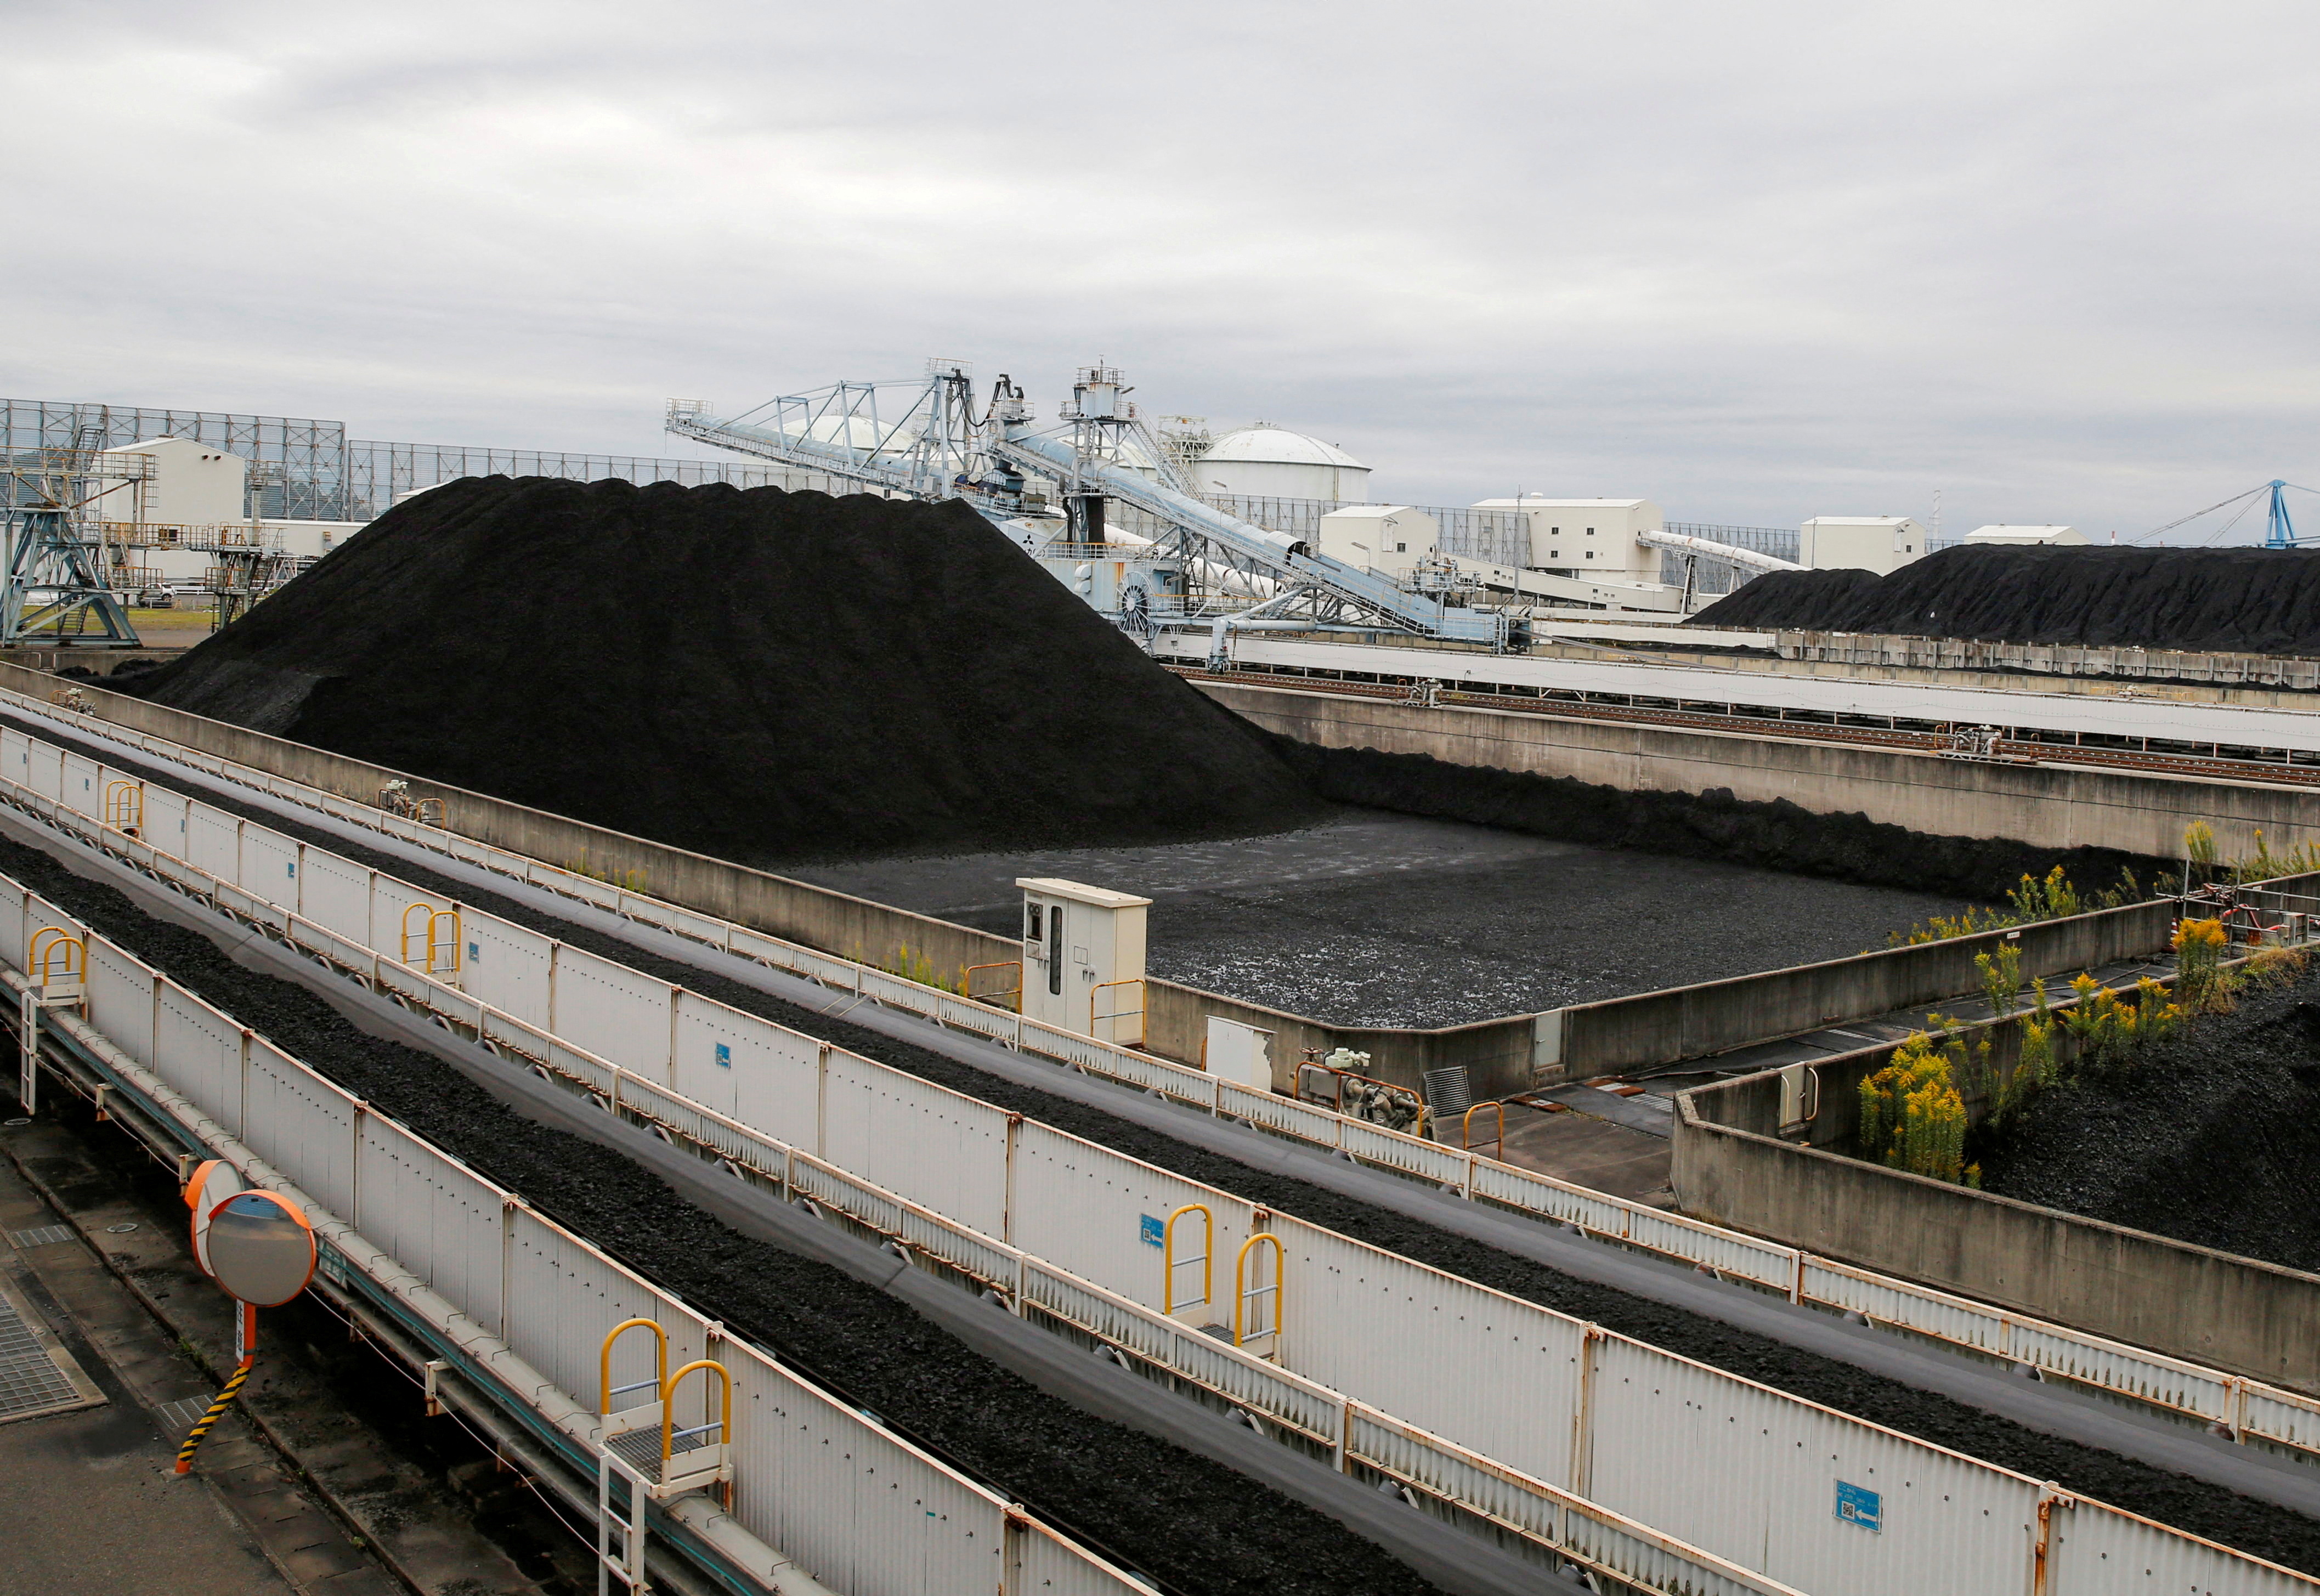 FILE PHOTO: Coal piles are seen at JERA's Hekinan thermal power station in Hekinan, central Japan